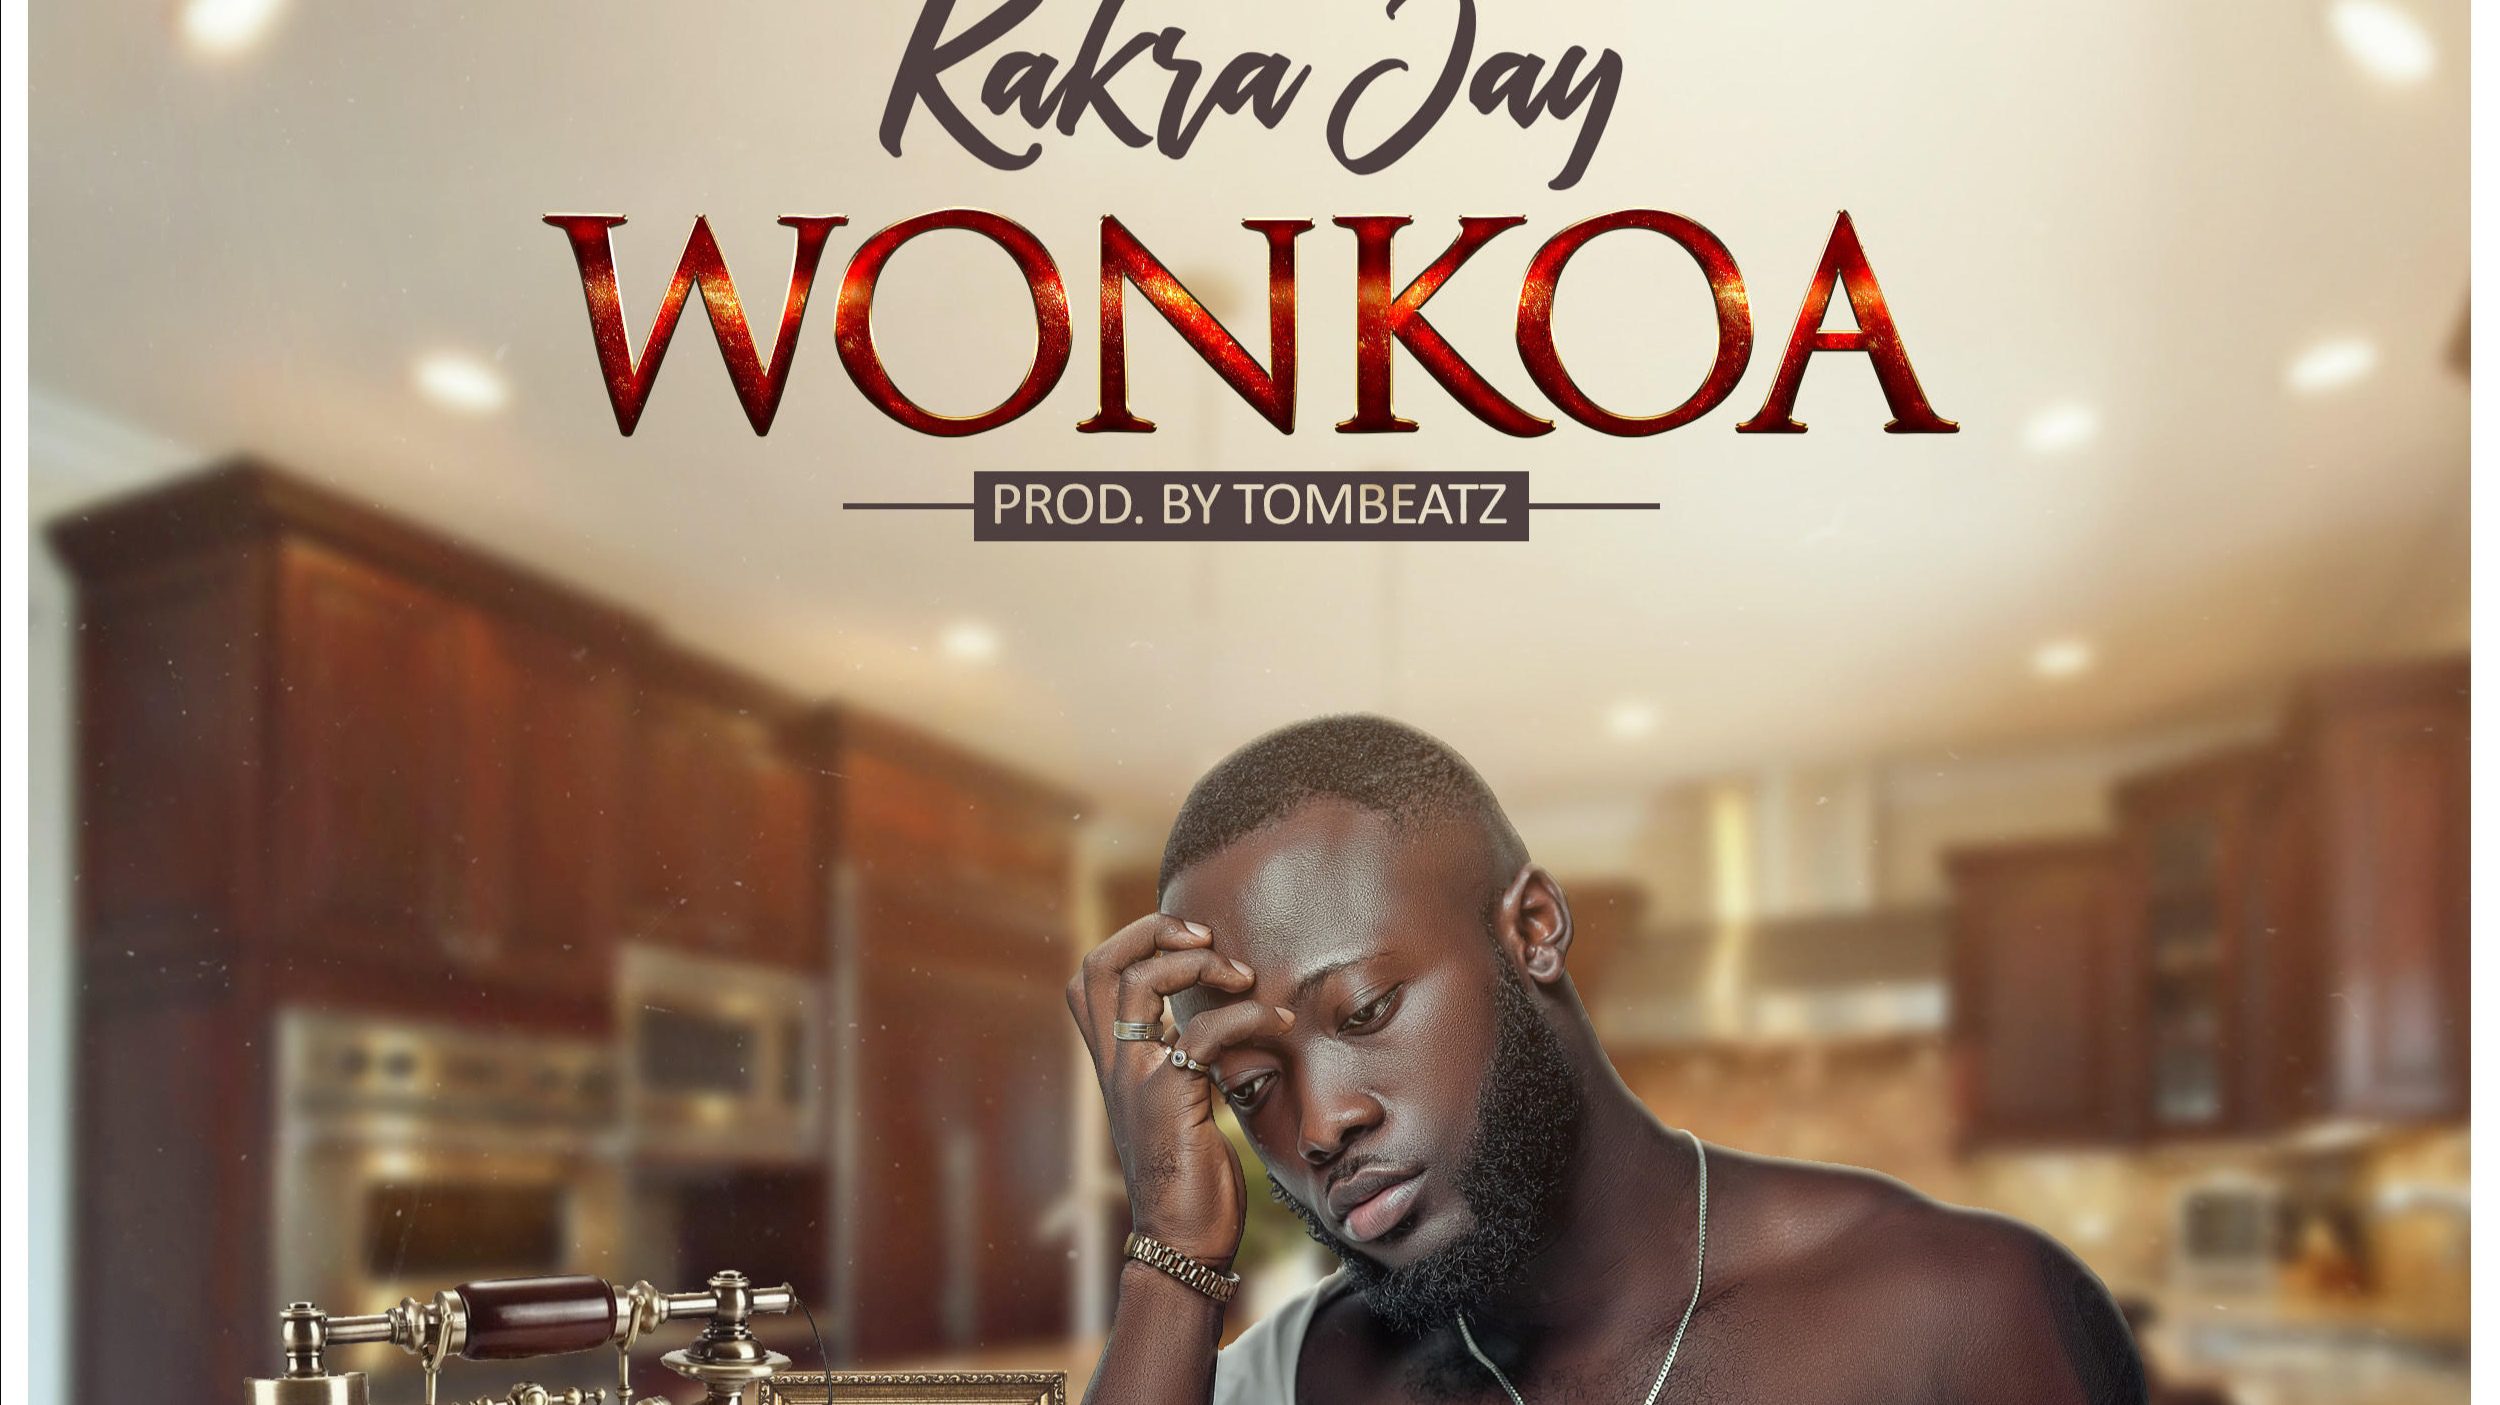 Kakra Jay Expresses His Unconditional Love On ‘Wonkoa’.